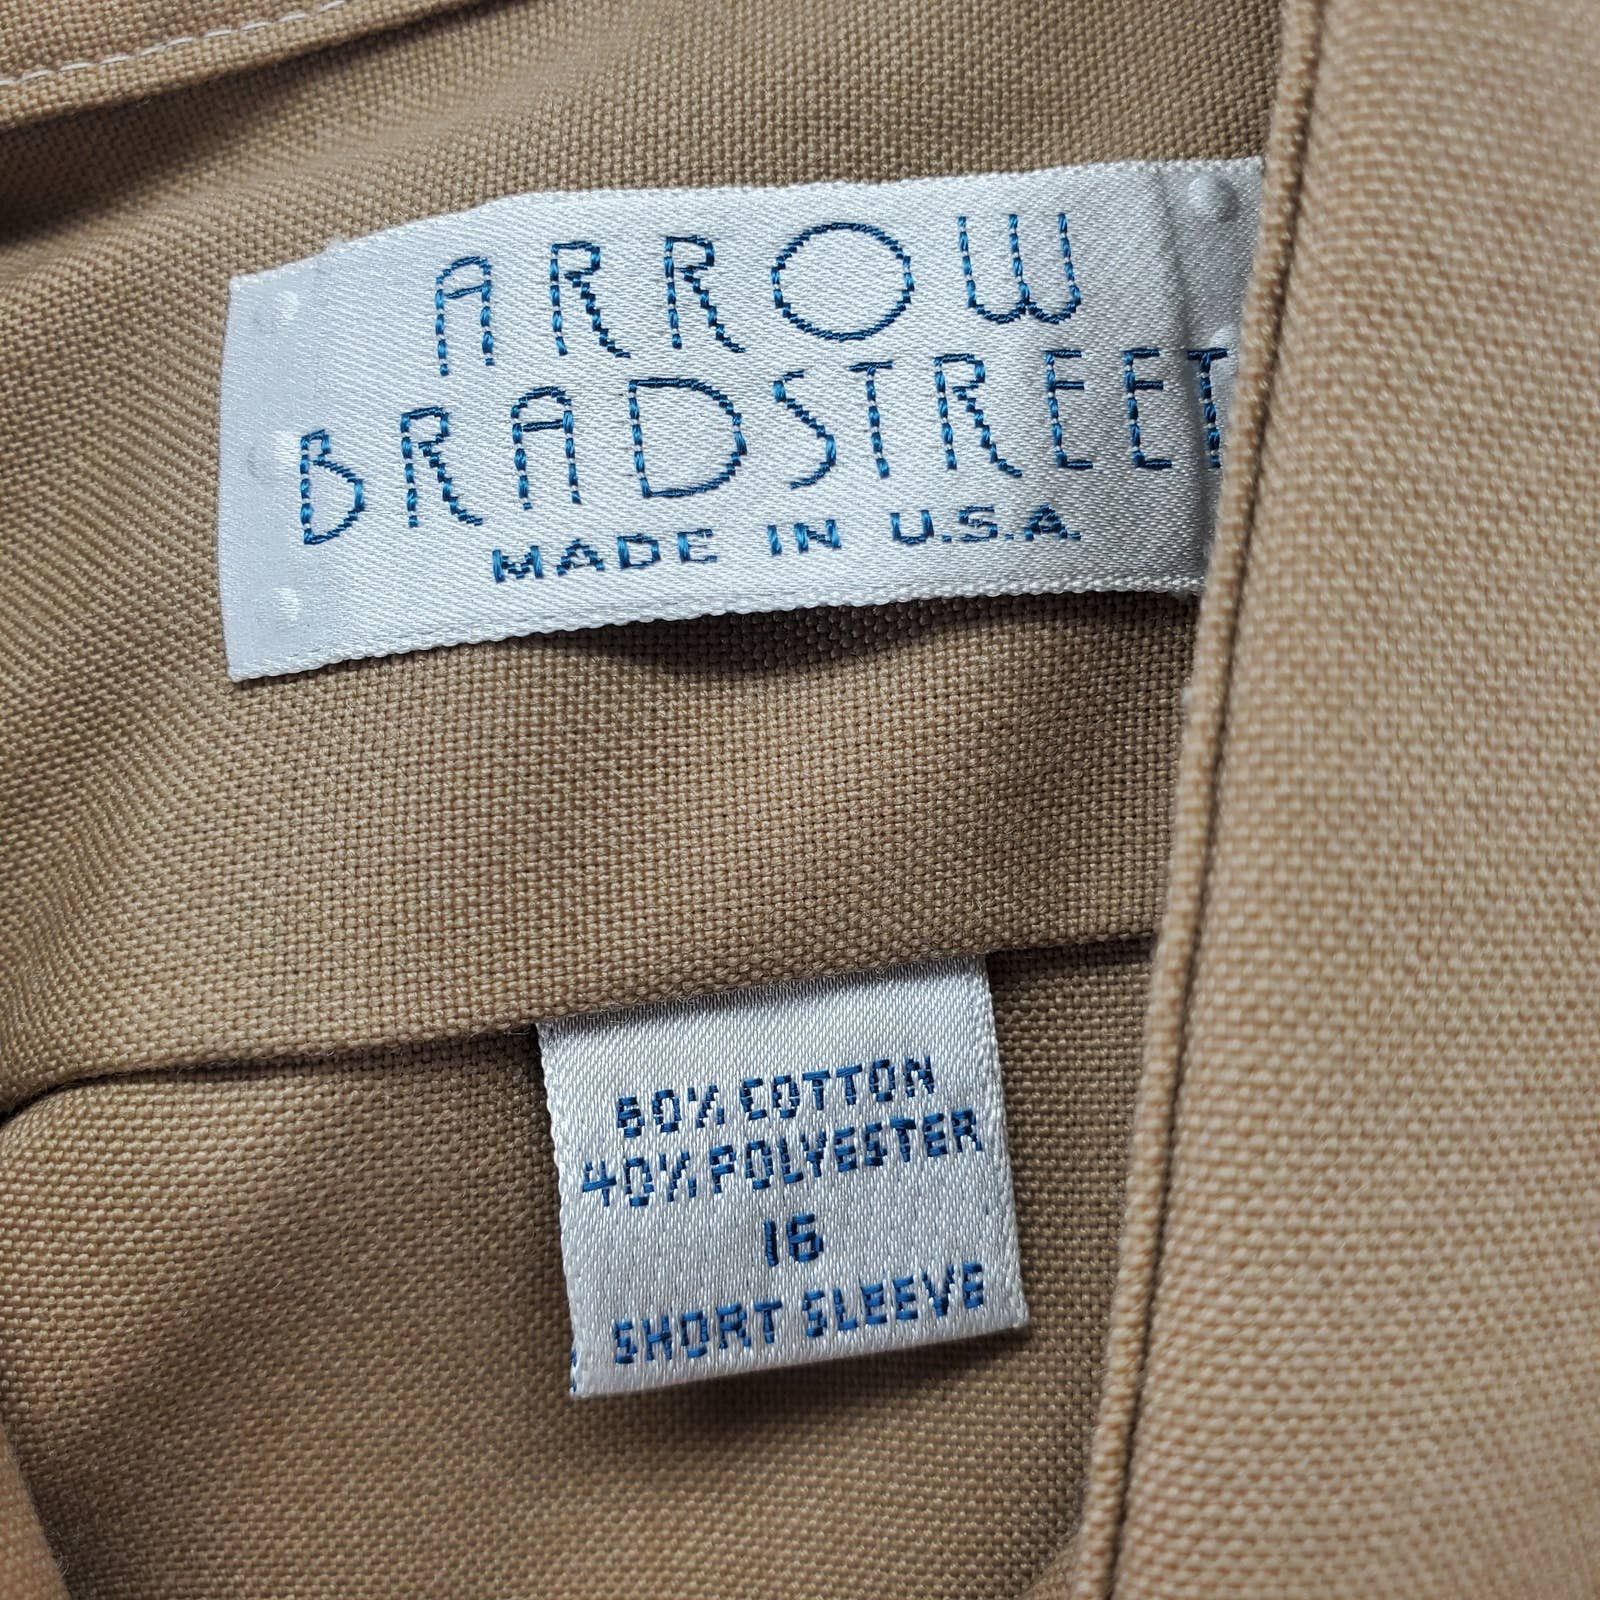 Vintage Vintage Arrow Western Button Up Short Sleeve Casual Shirt Size US L / EU 52-54 / 3 - 4 Preview